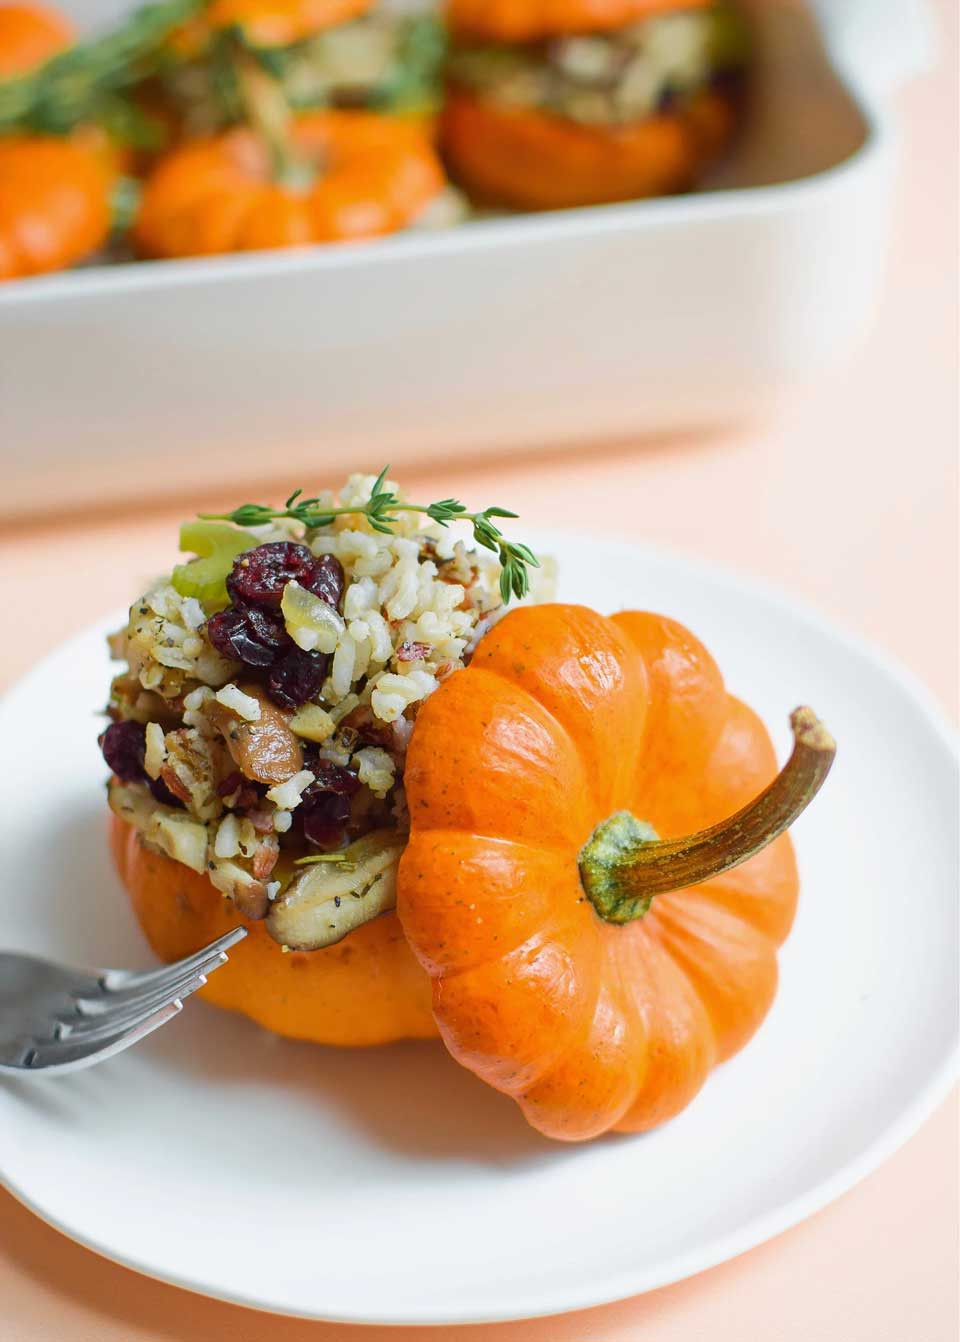 Vegetarian Main Dishes Thanksgiving
 19 Best Healthy Thanksgiving Ve arian Main Dishes Two